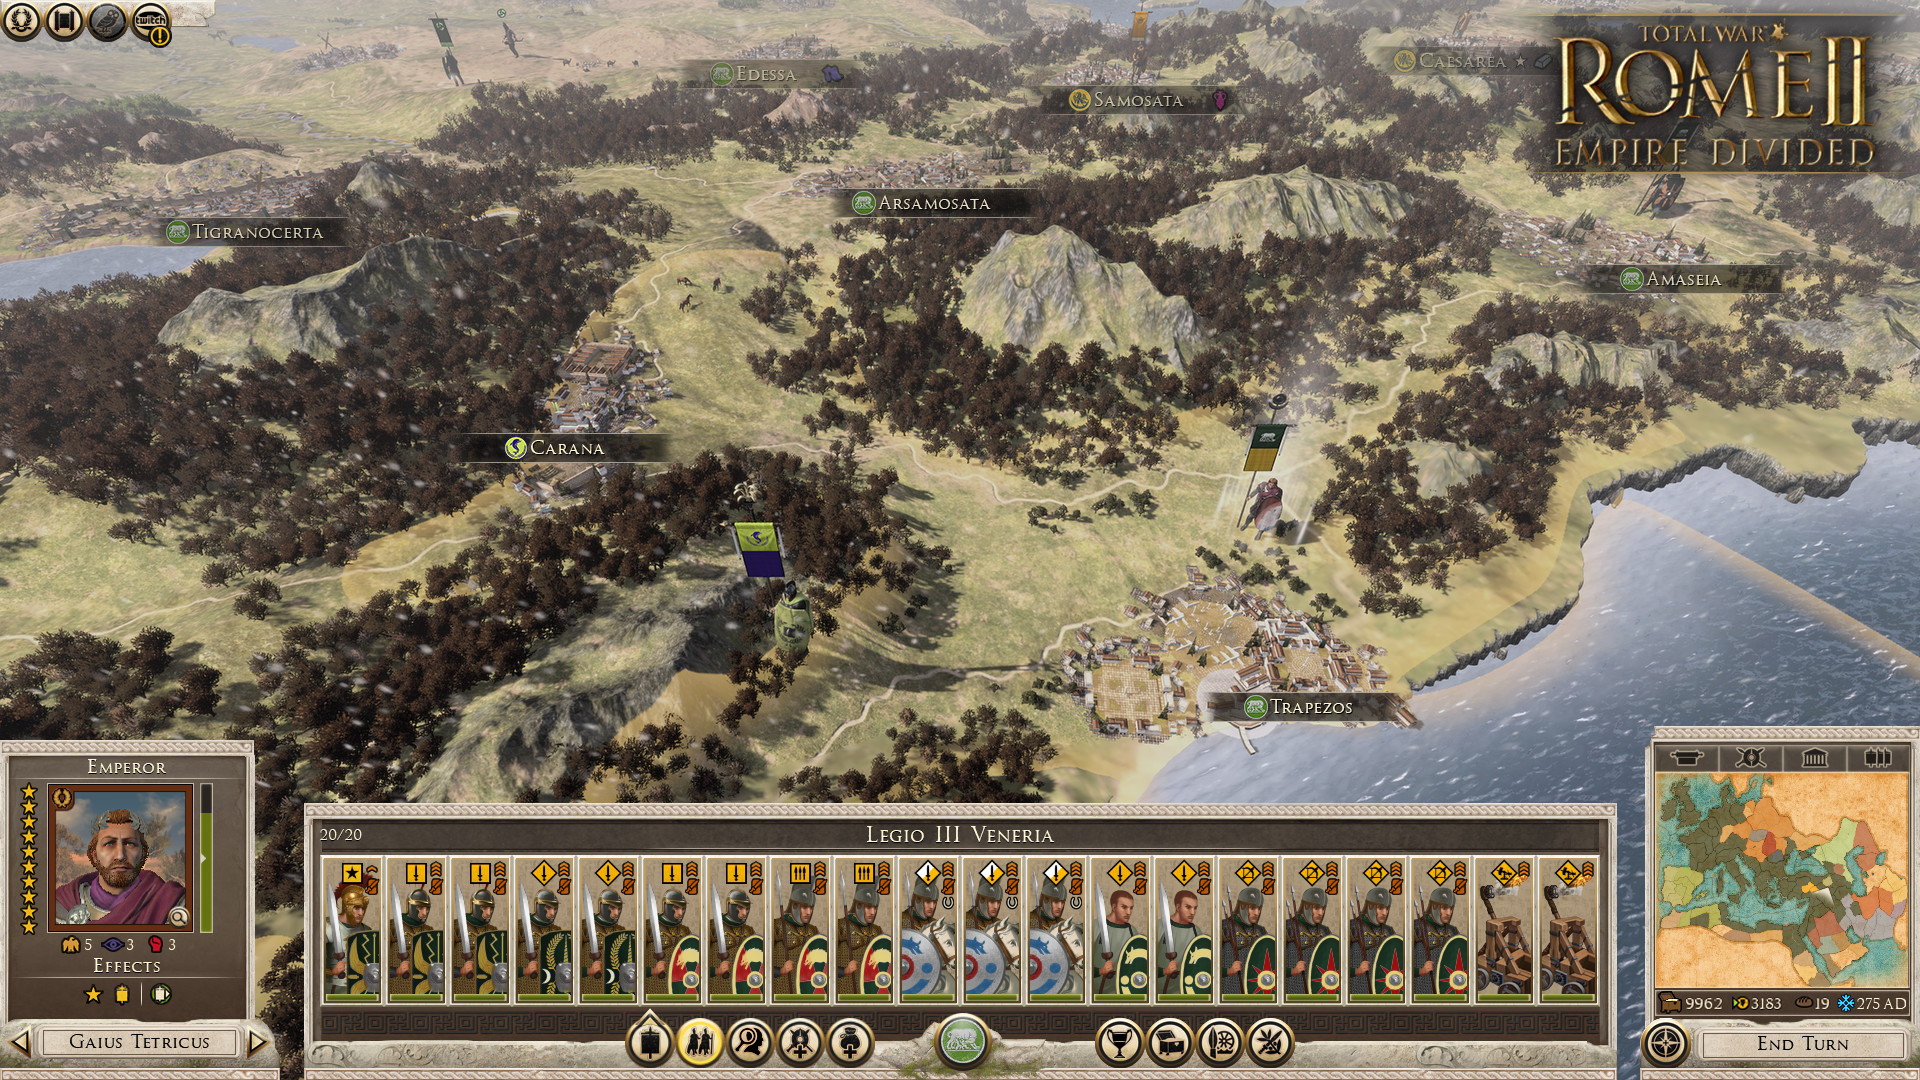 Total War: Rome II - Empire Divided - screenshot 5